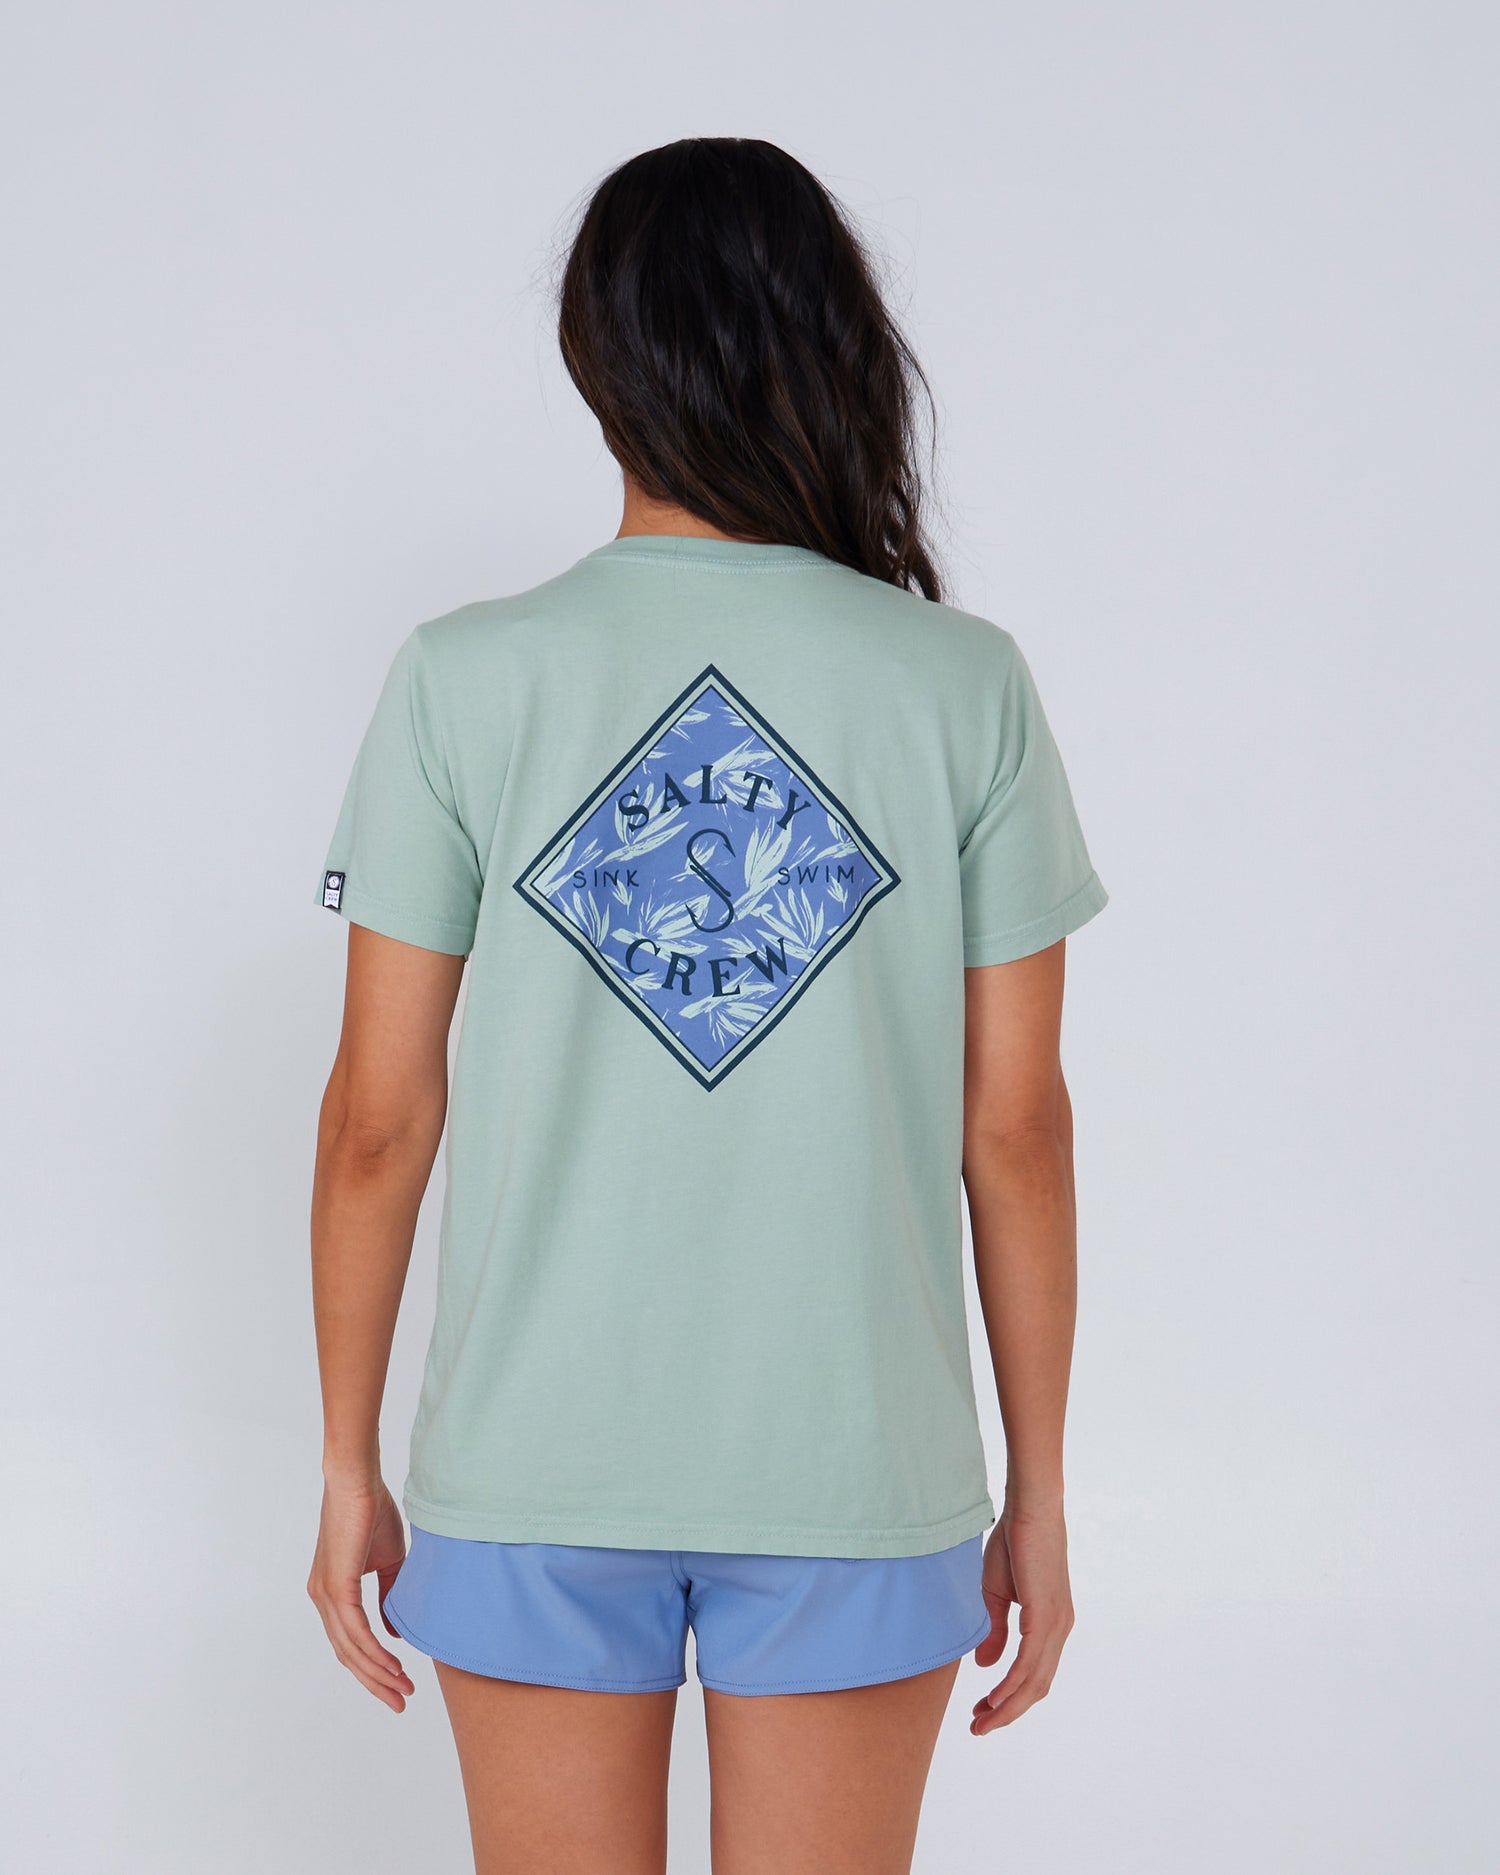 Salty Crew Printed Tippet Boyfriend Tee - Jade Womens T Shirt